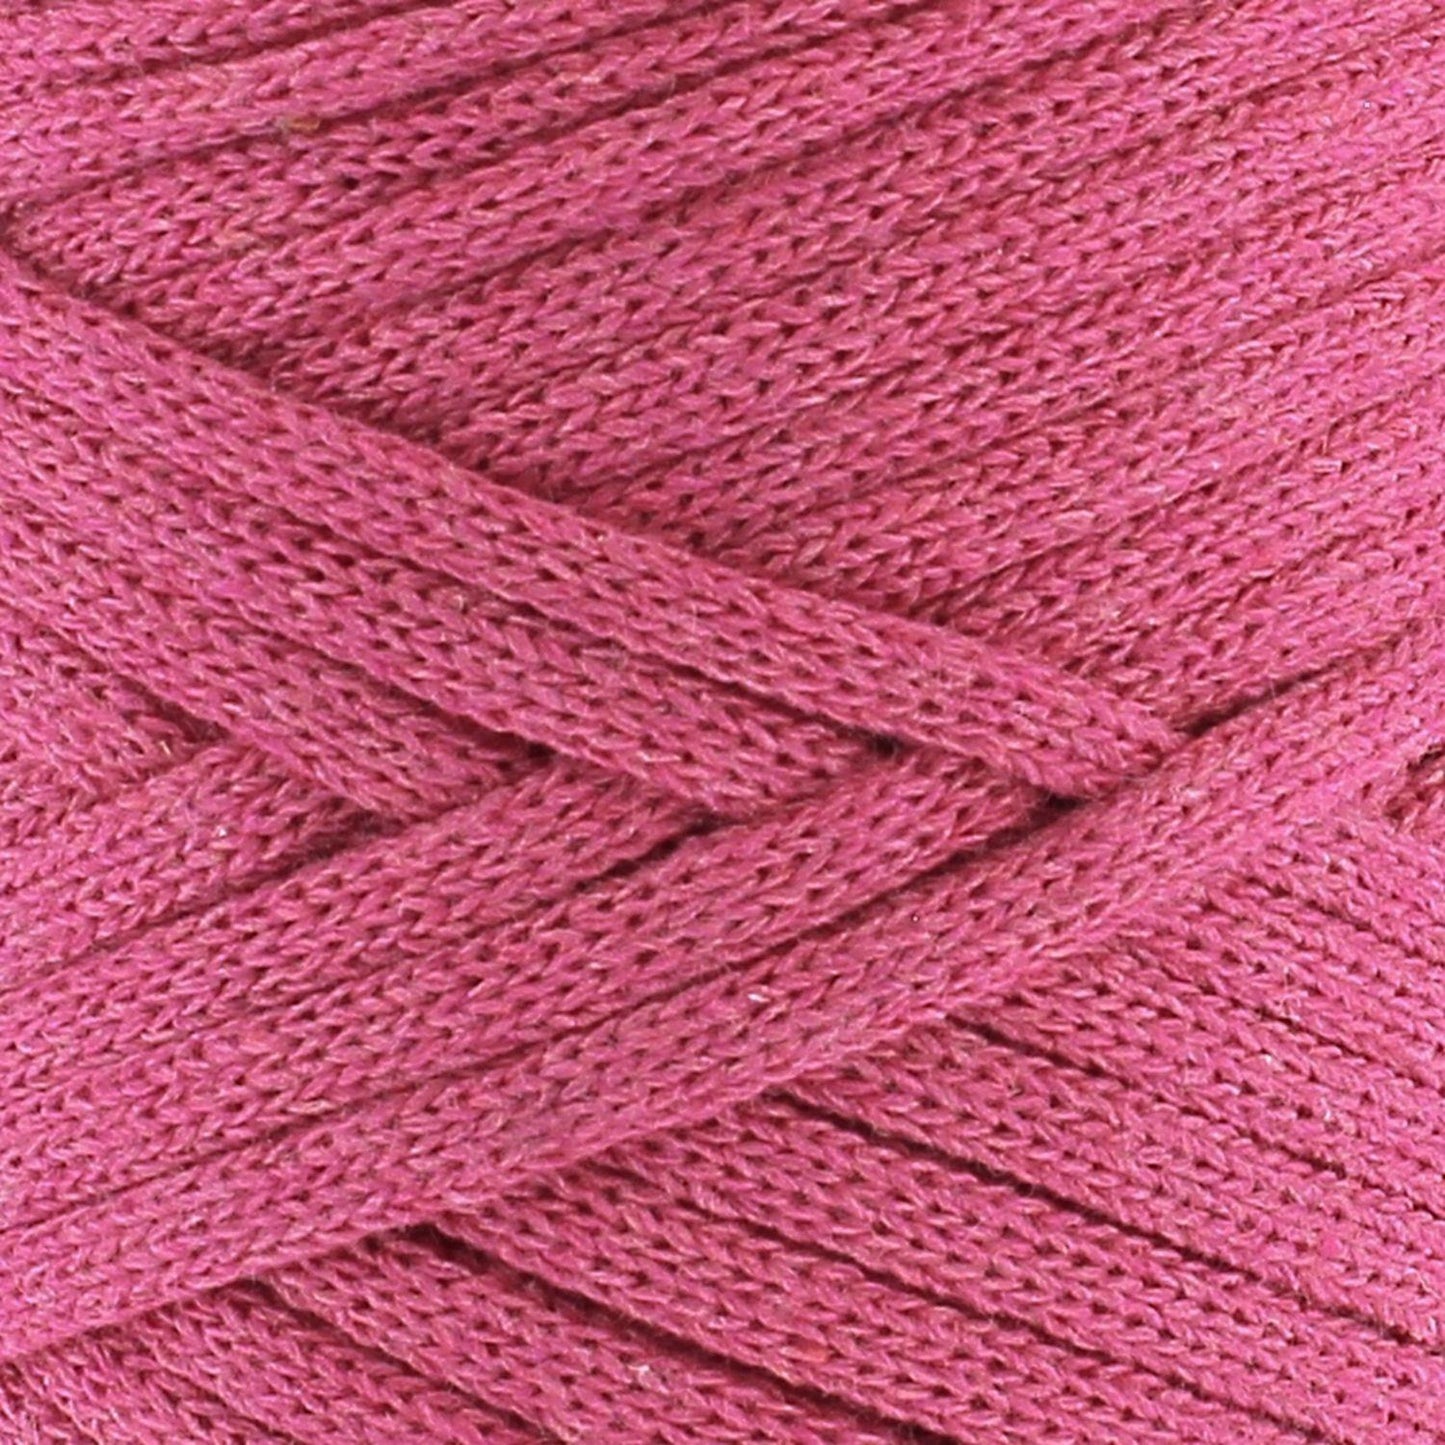 [Hoooked] Cordino Bubblegum Pink Cotton Macrame Cord - 54M, 150g